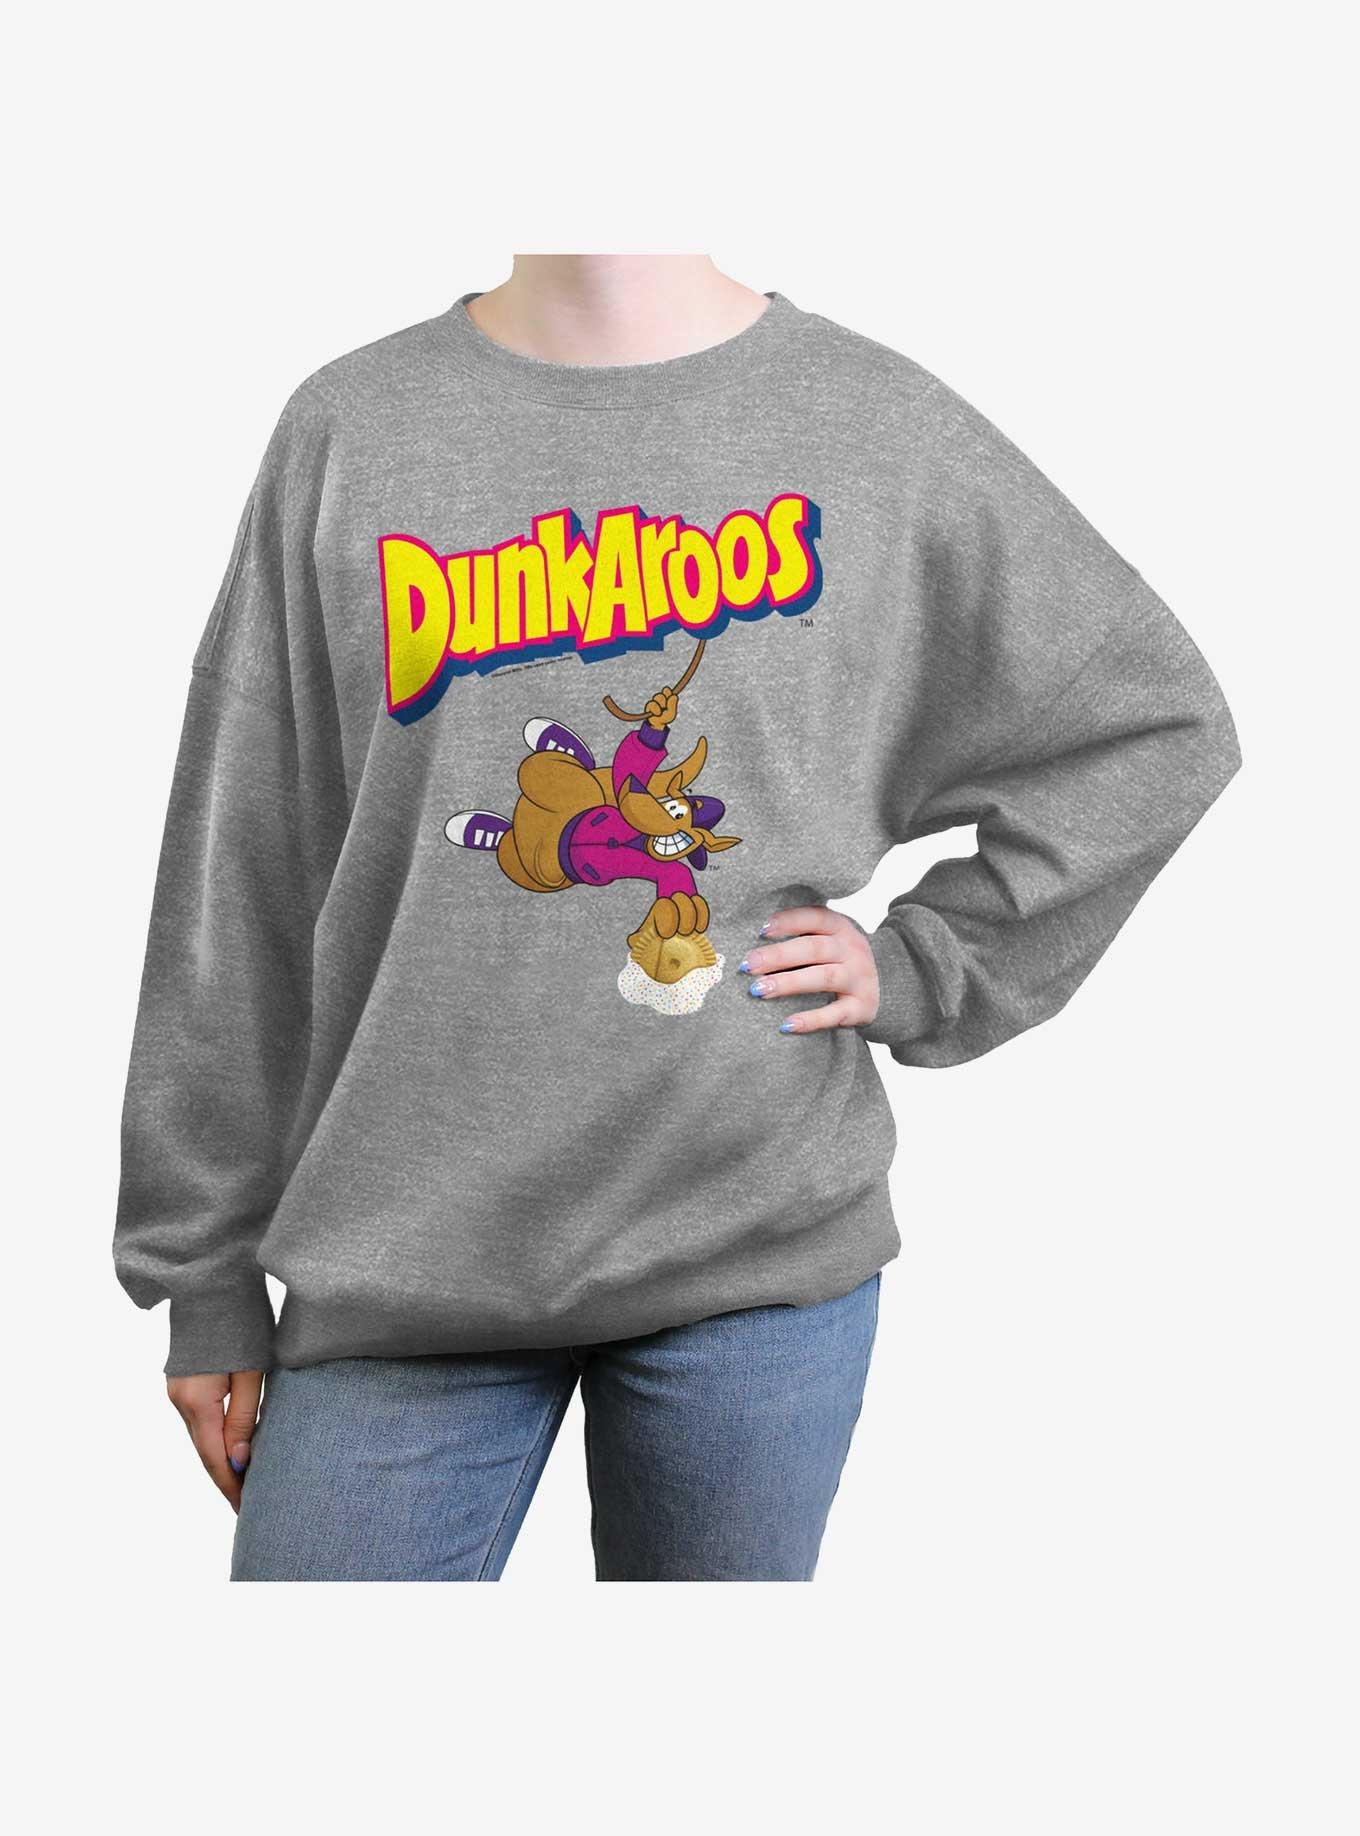 Dunkaroos Dunking Girls Oversized Sweatshirt